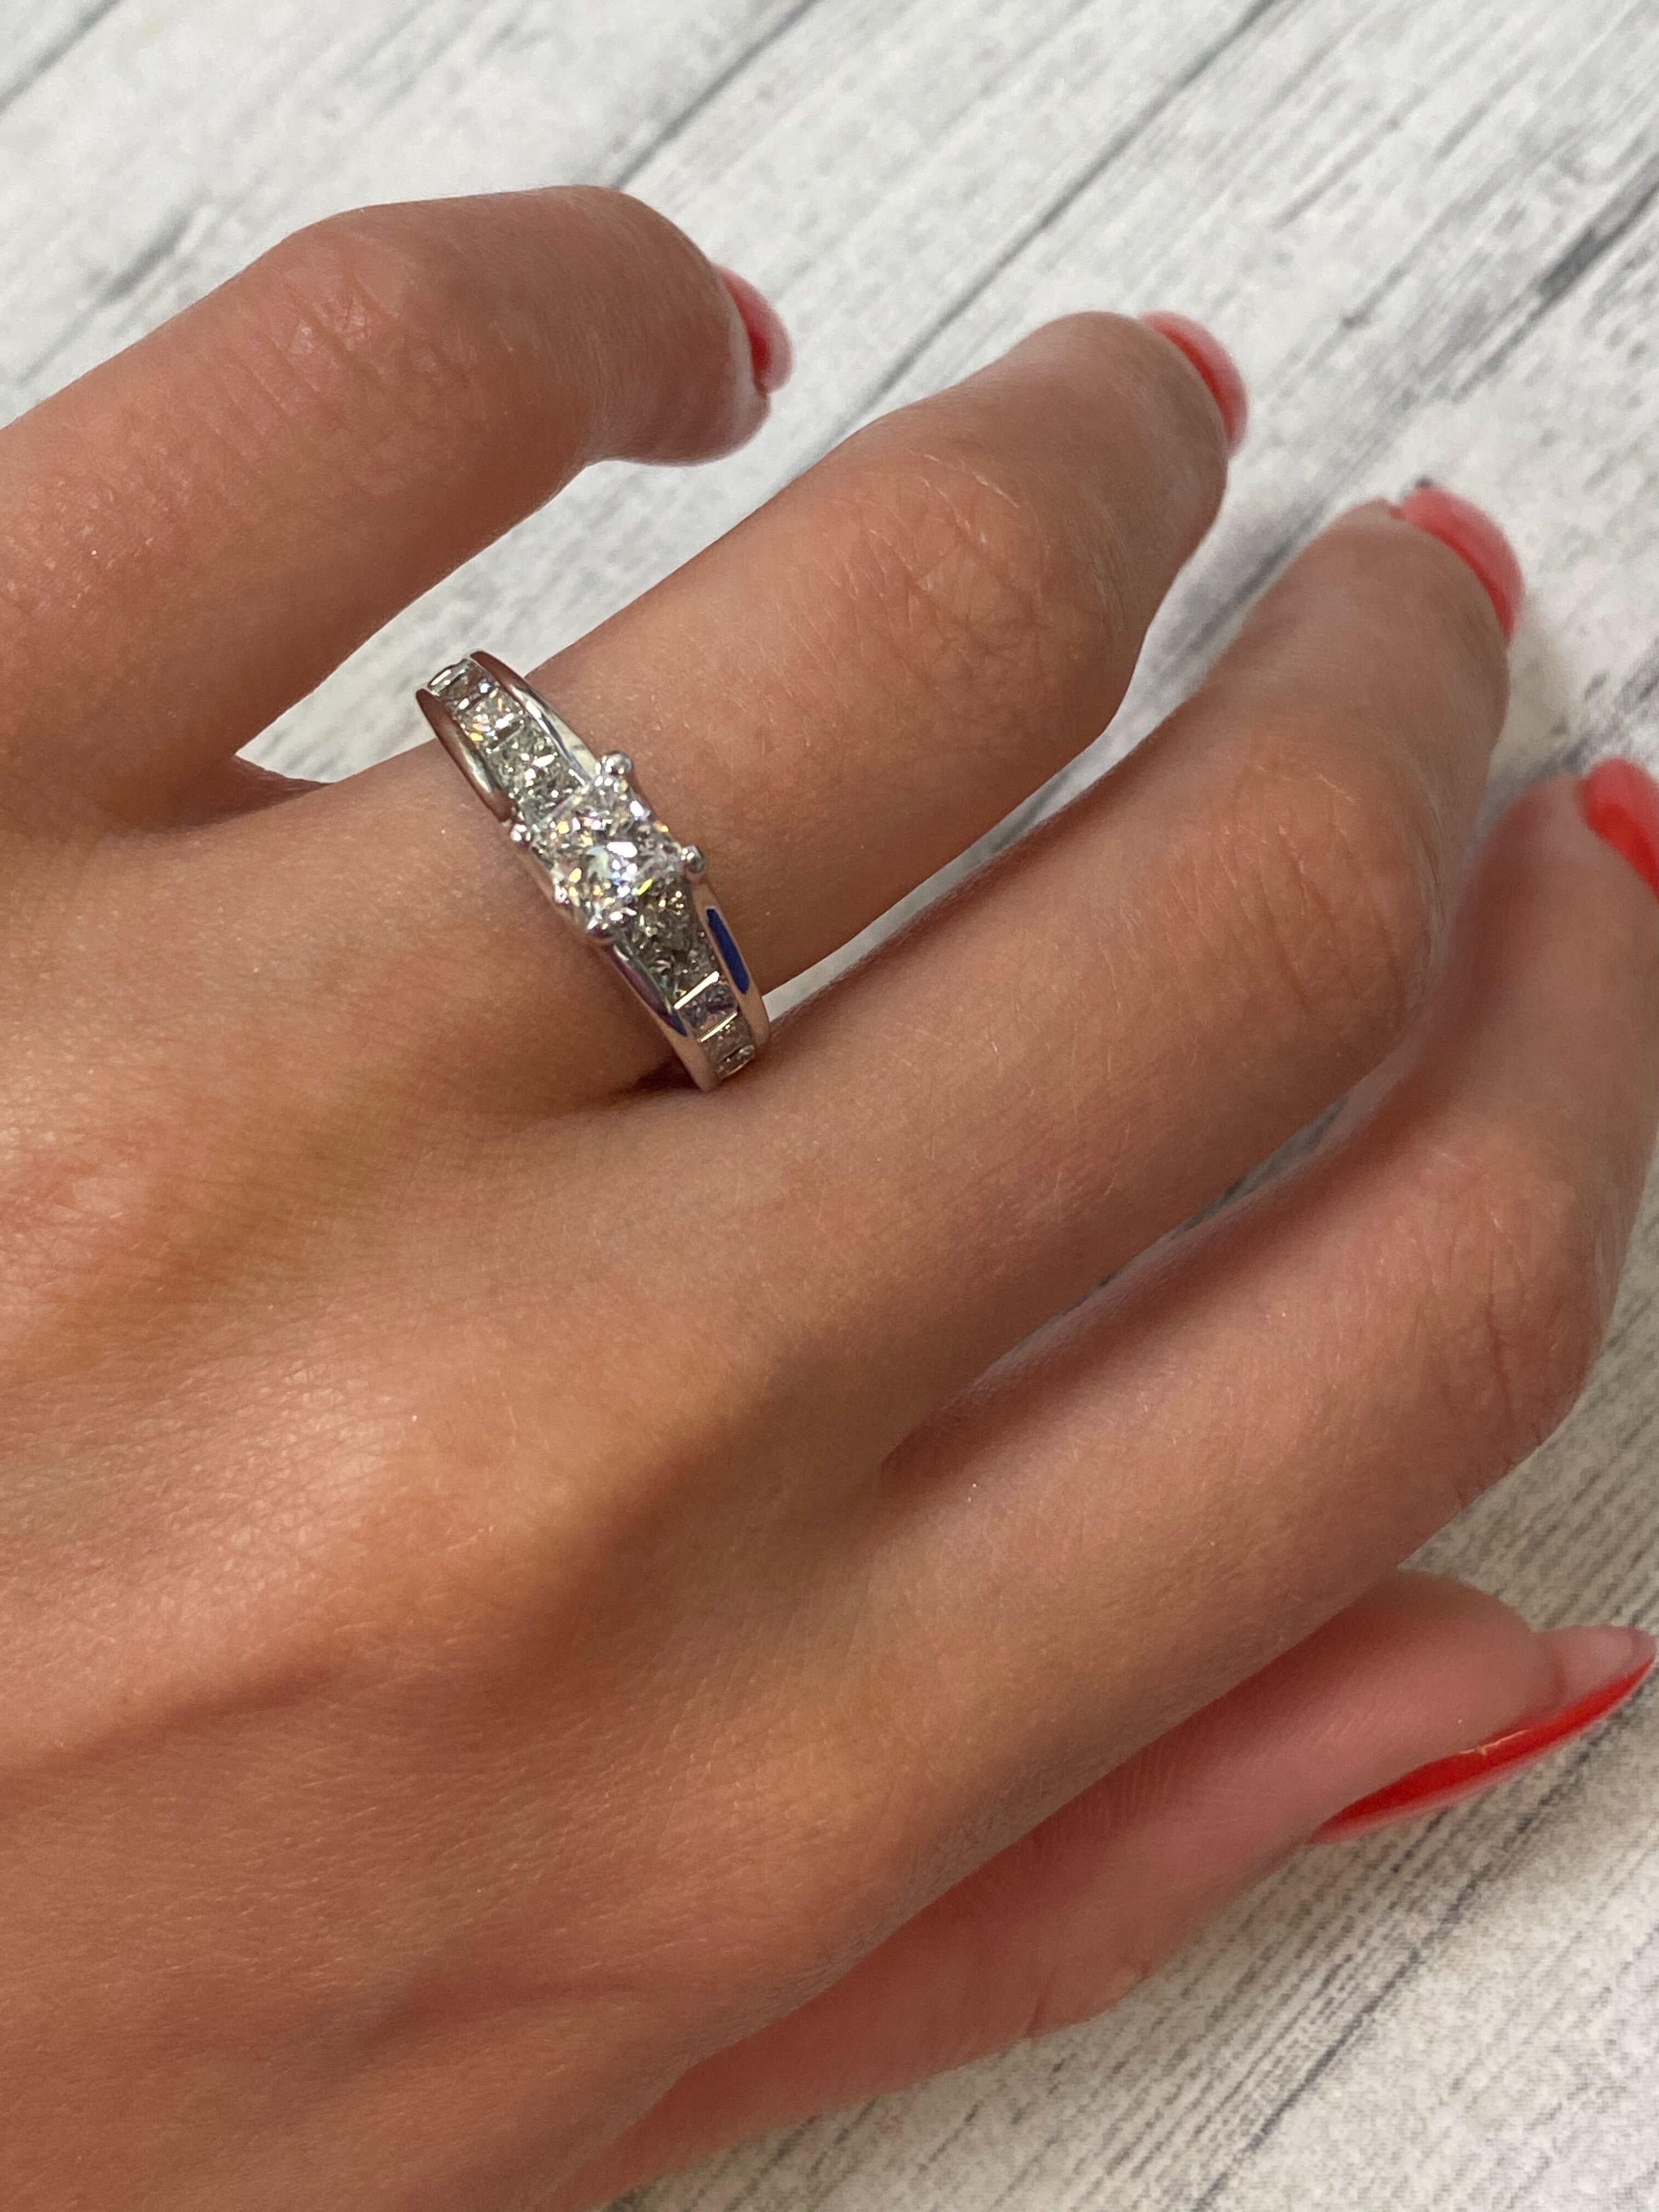 Rachel Koen Princess Cut Diamond Engagement Ring 14K White Gold 1.75cts For Sale 2